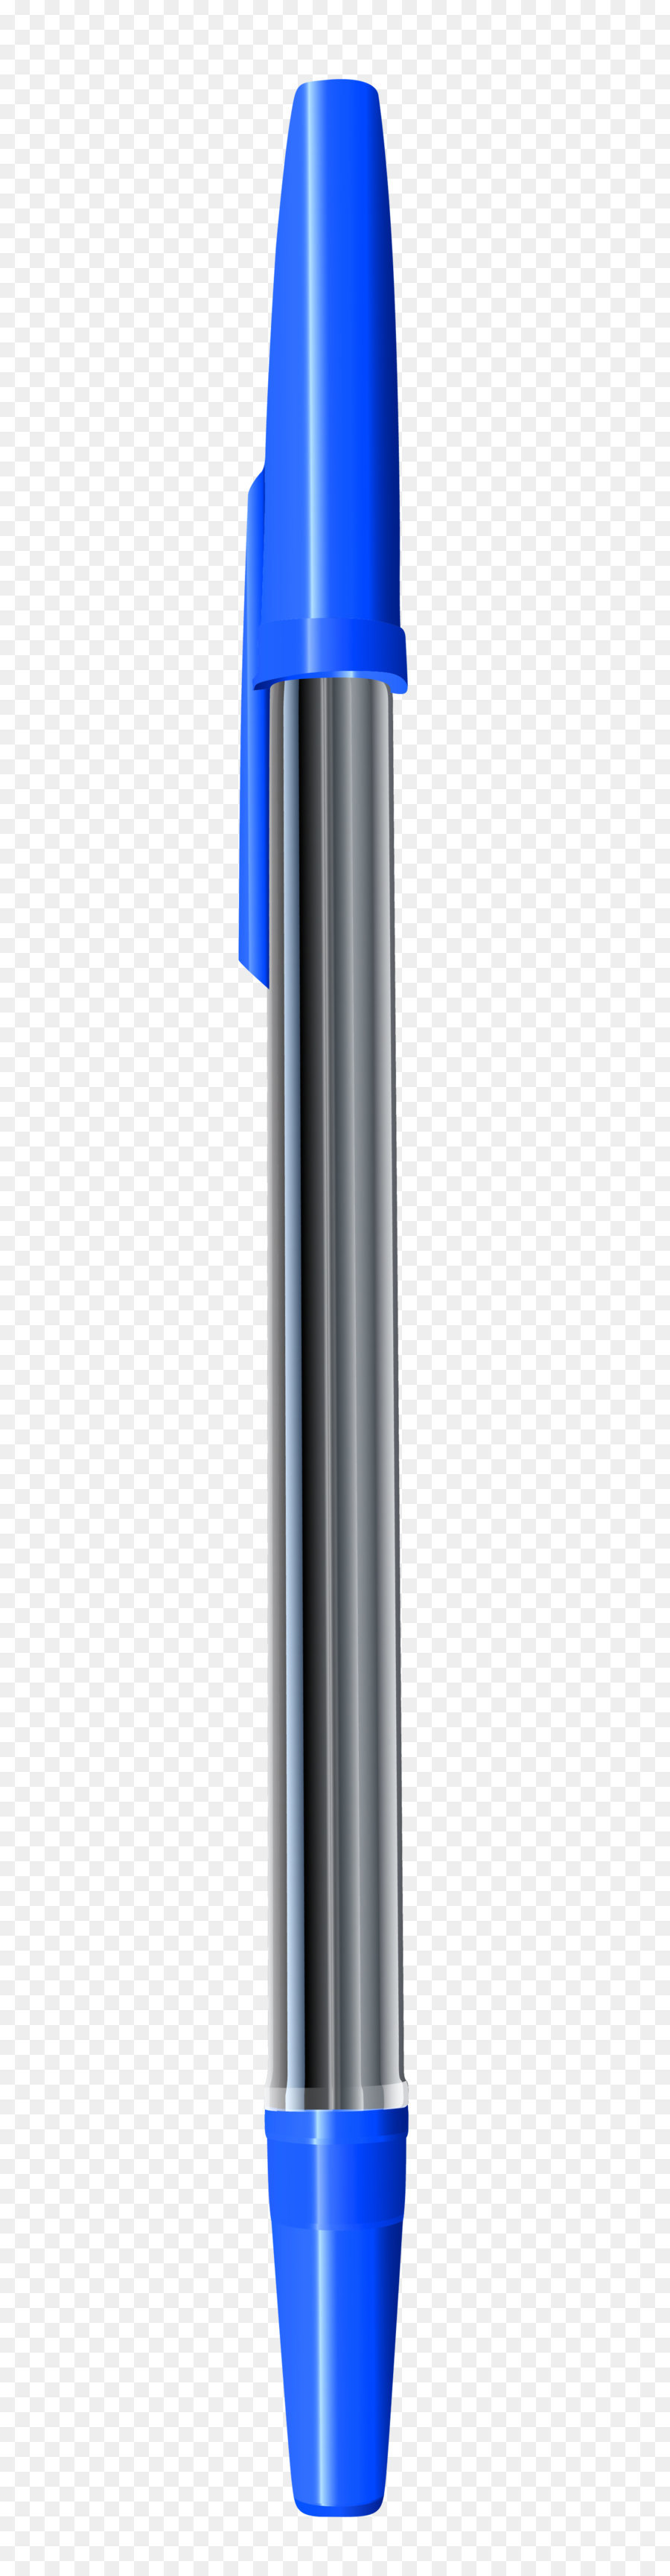 Kobalt blau Produkt Design - Blue Stift PNG Clipart Bild